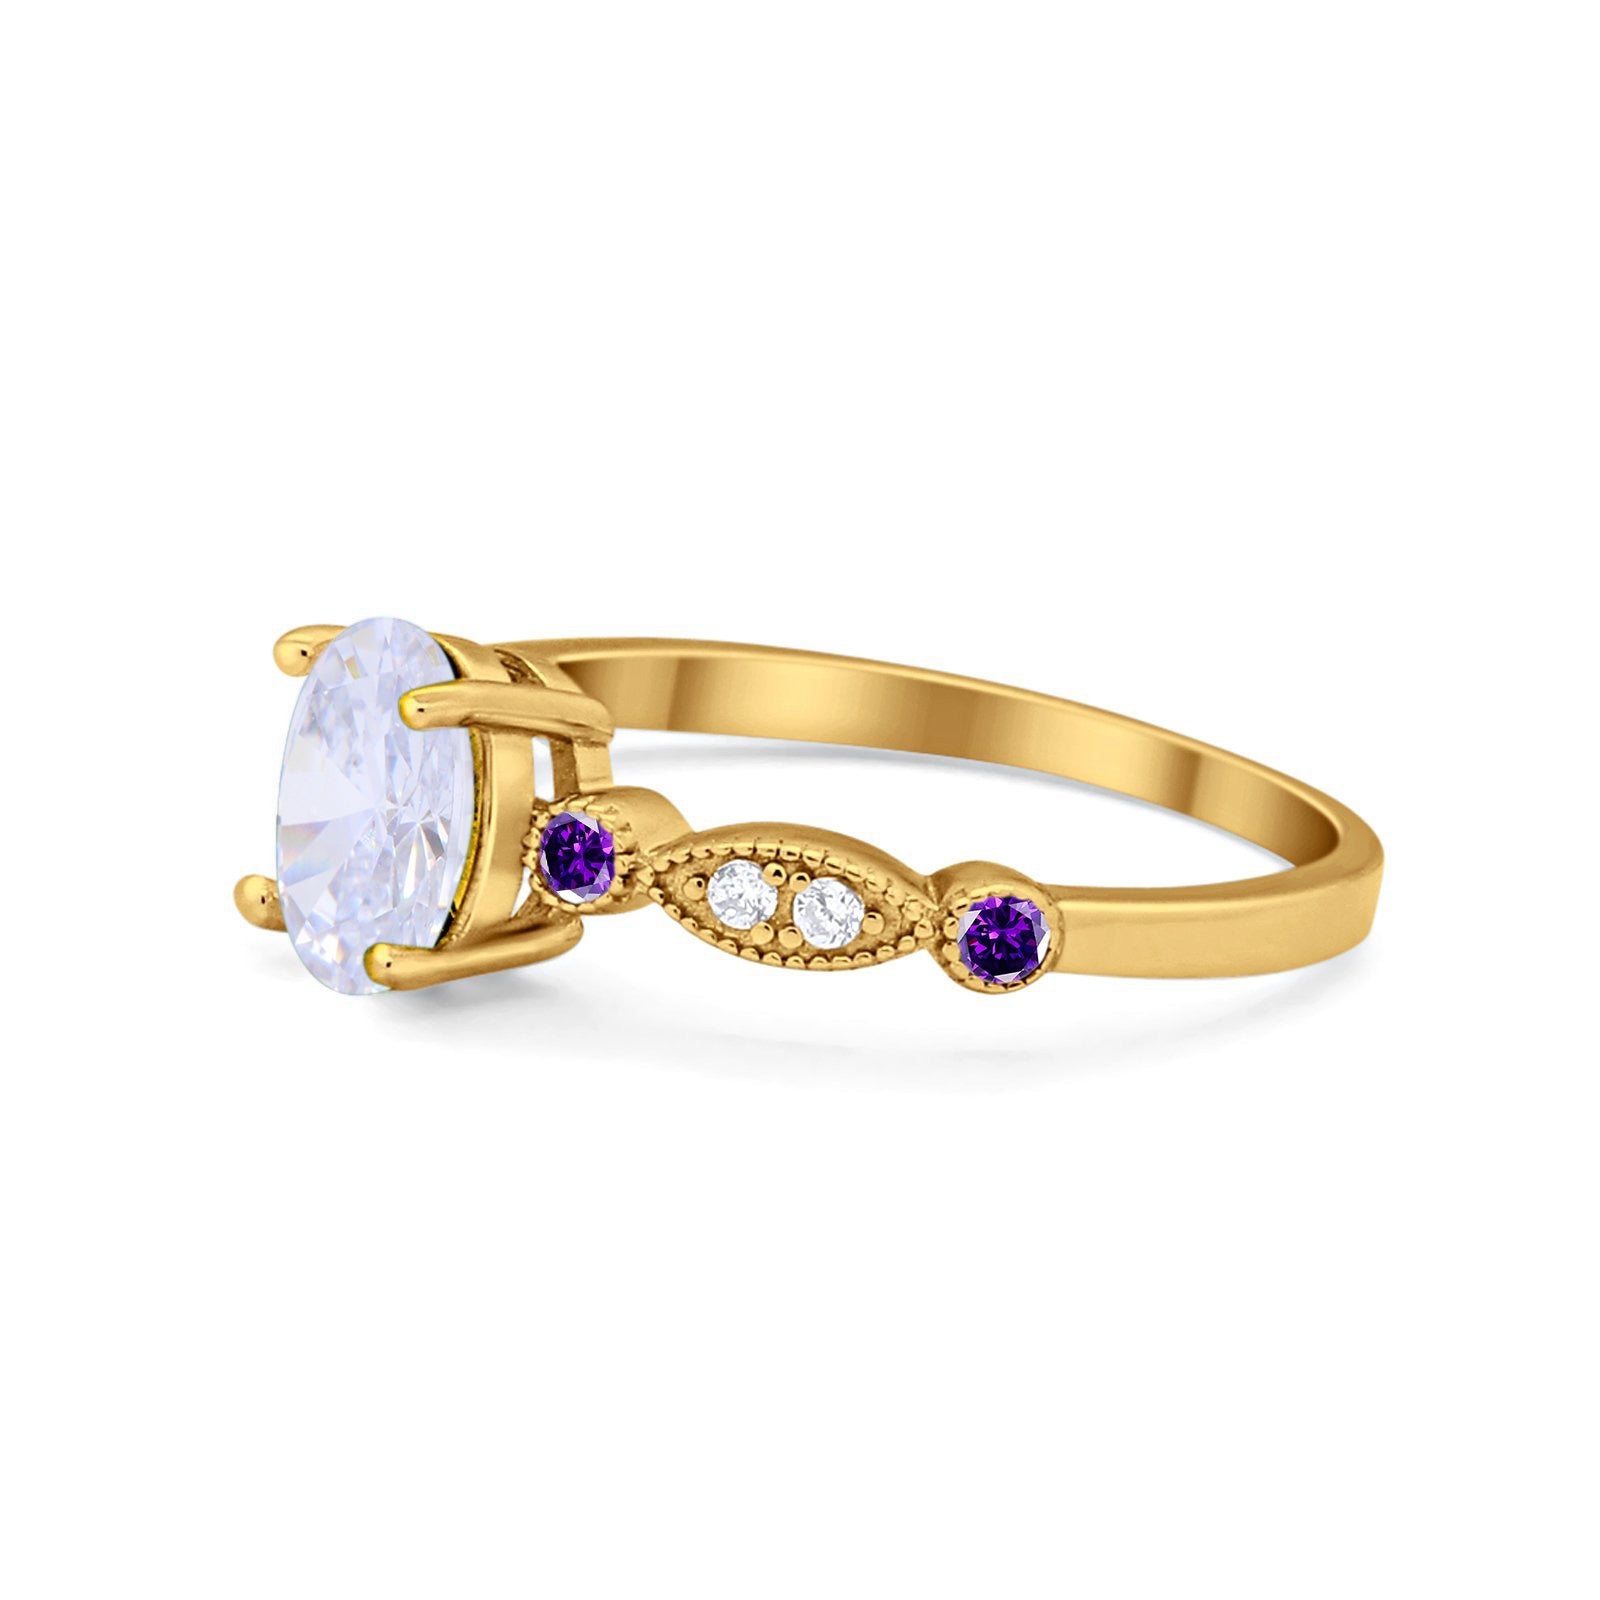 14K Gold Vintage Style Oval Shape Bridal Amethyst Simulated Cubic Zirconia Wedding Engagement Ring